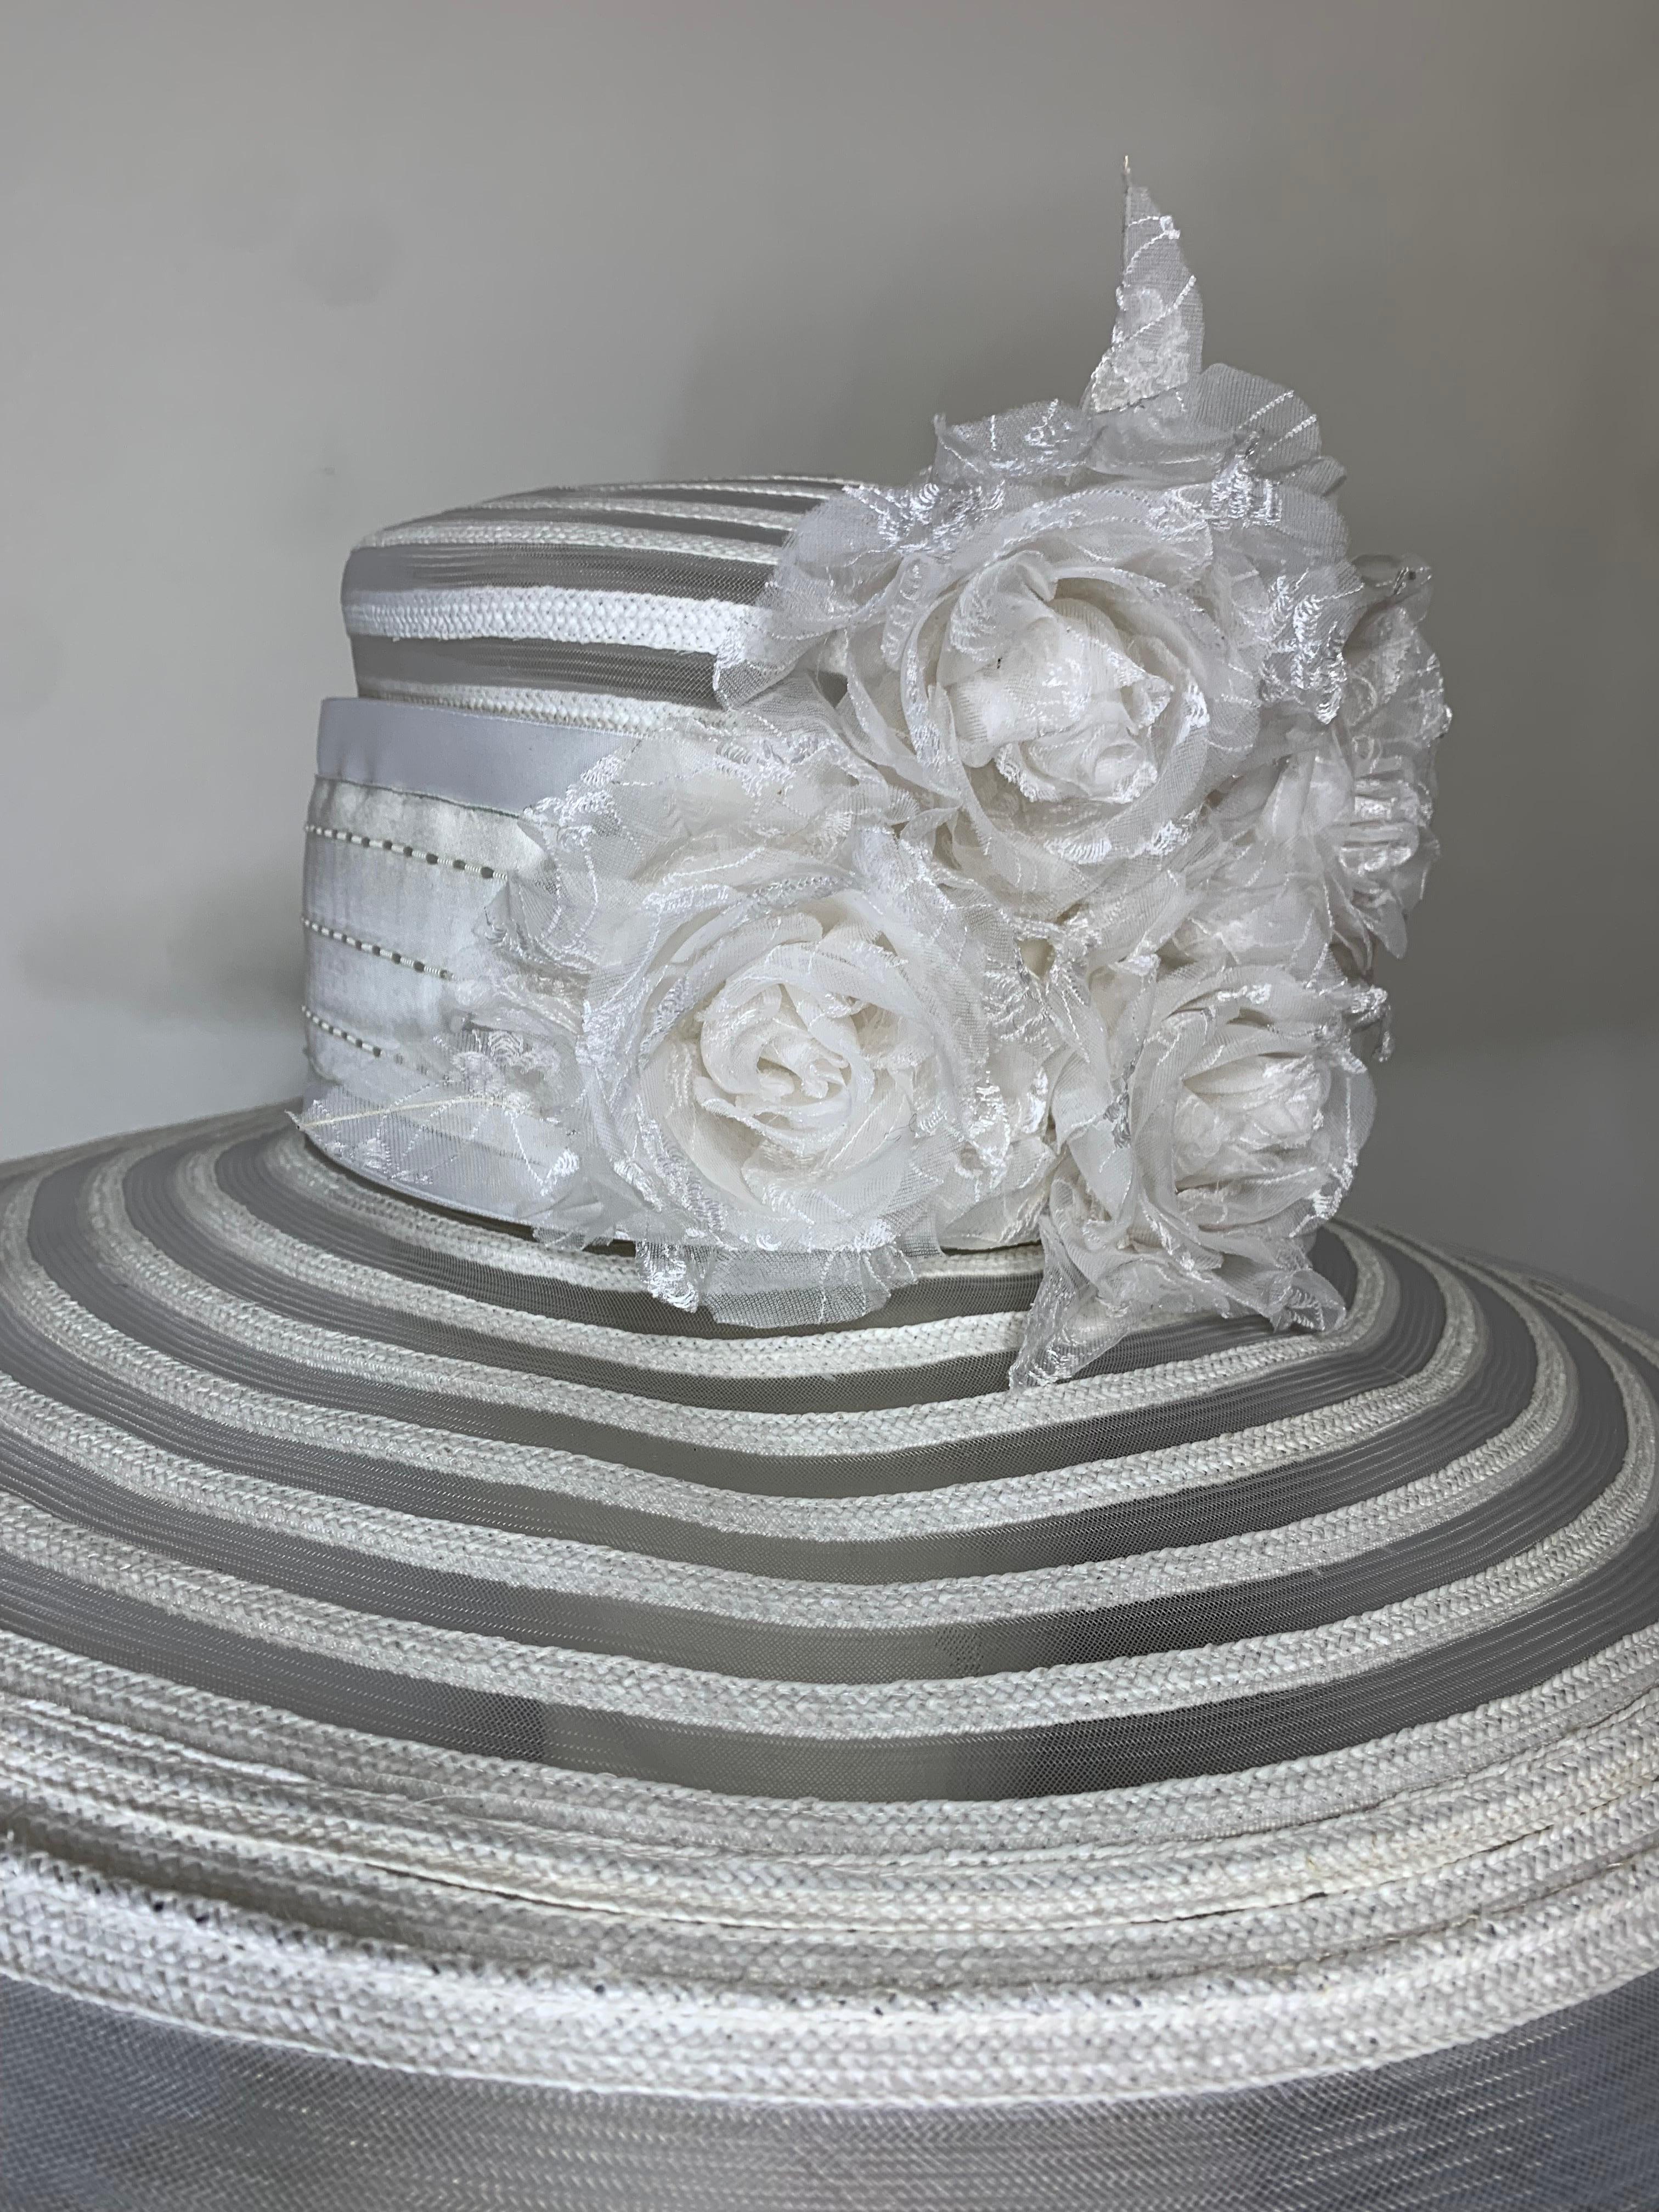 Maison Michel Spring/Summer Sheer White Striped Straw Wide Brim Hat w Florals  In Excellent Condition For Sale In Gresham, OR